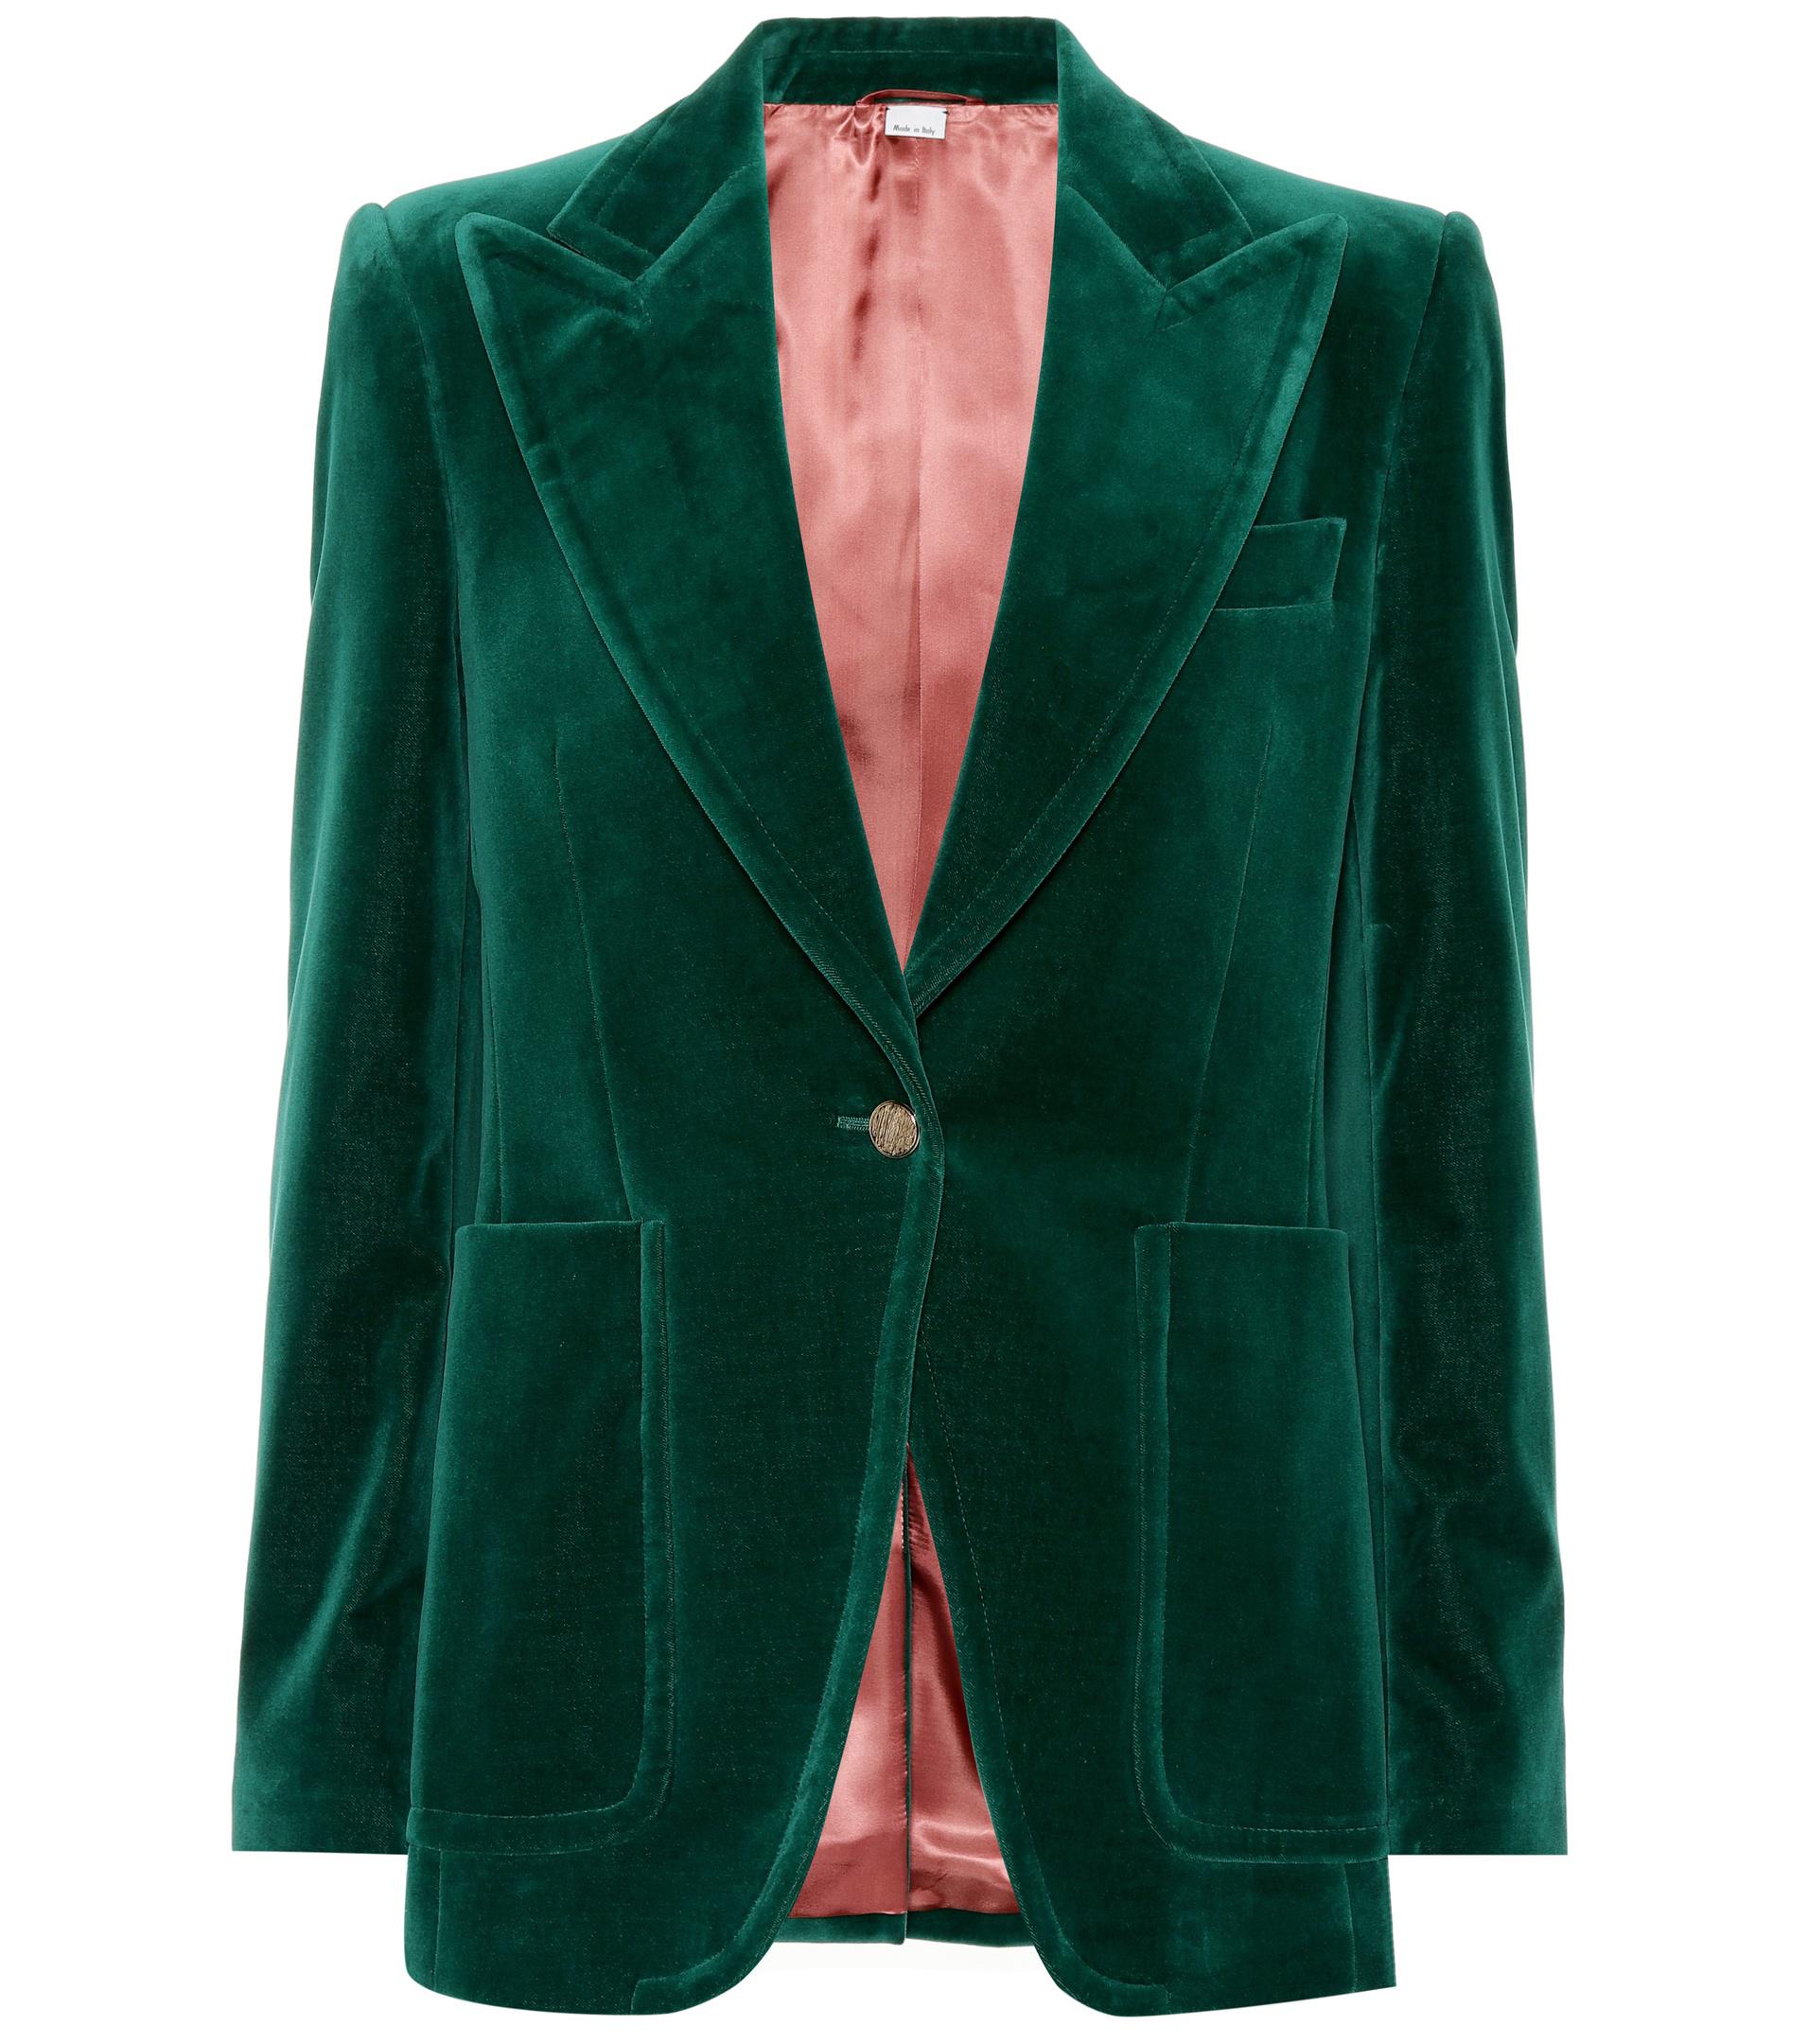 Gucci Velvet Blazer in Green - Lyst